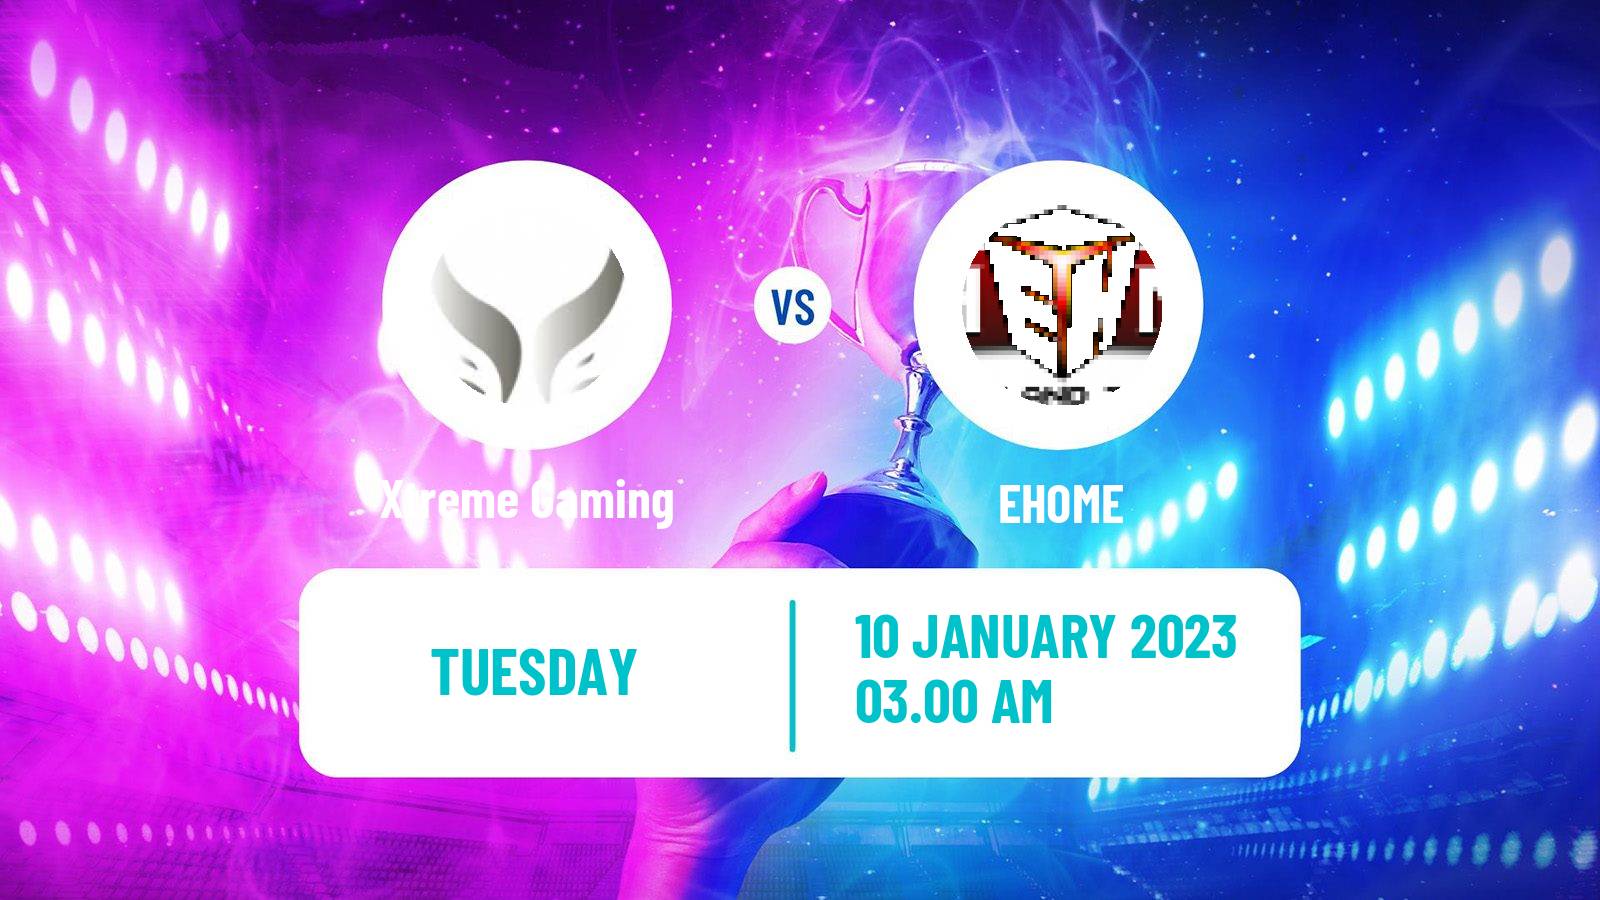 Esports eSports Xtreme Gaming - EHOME